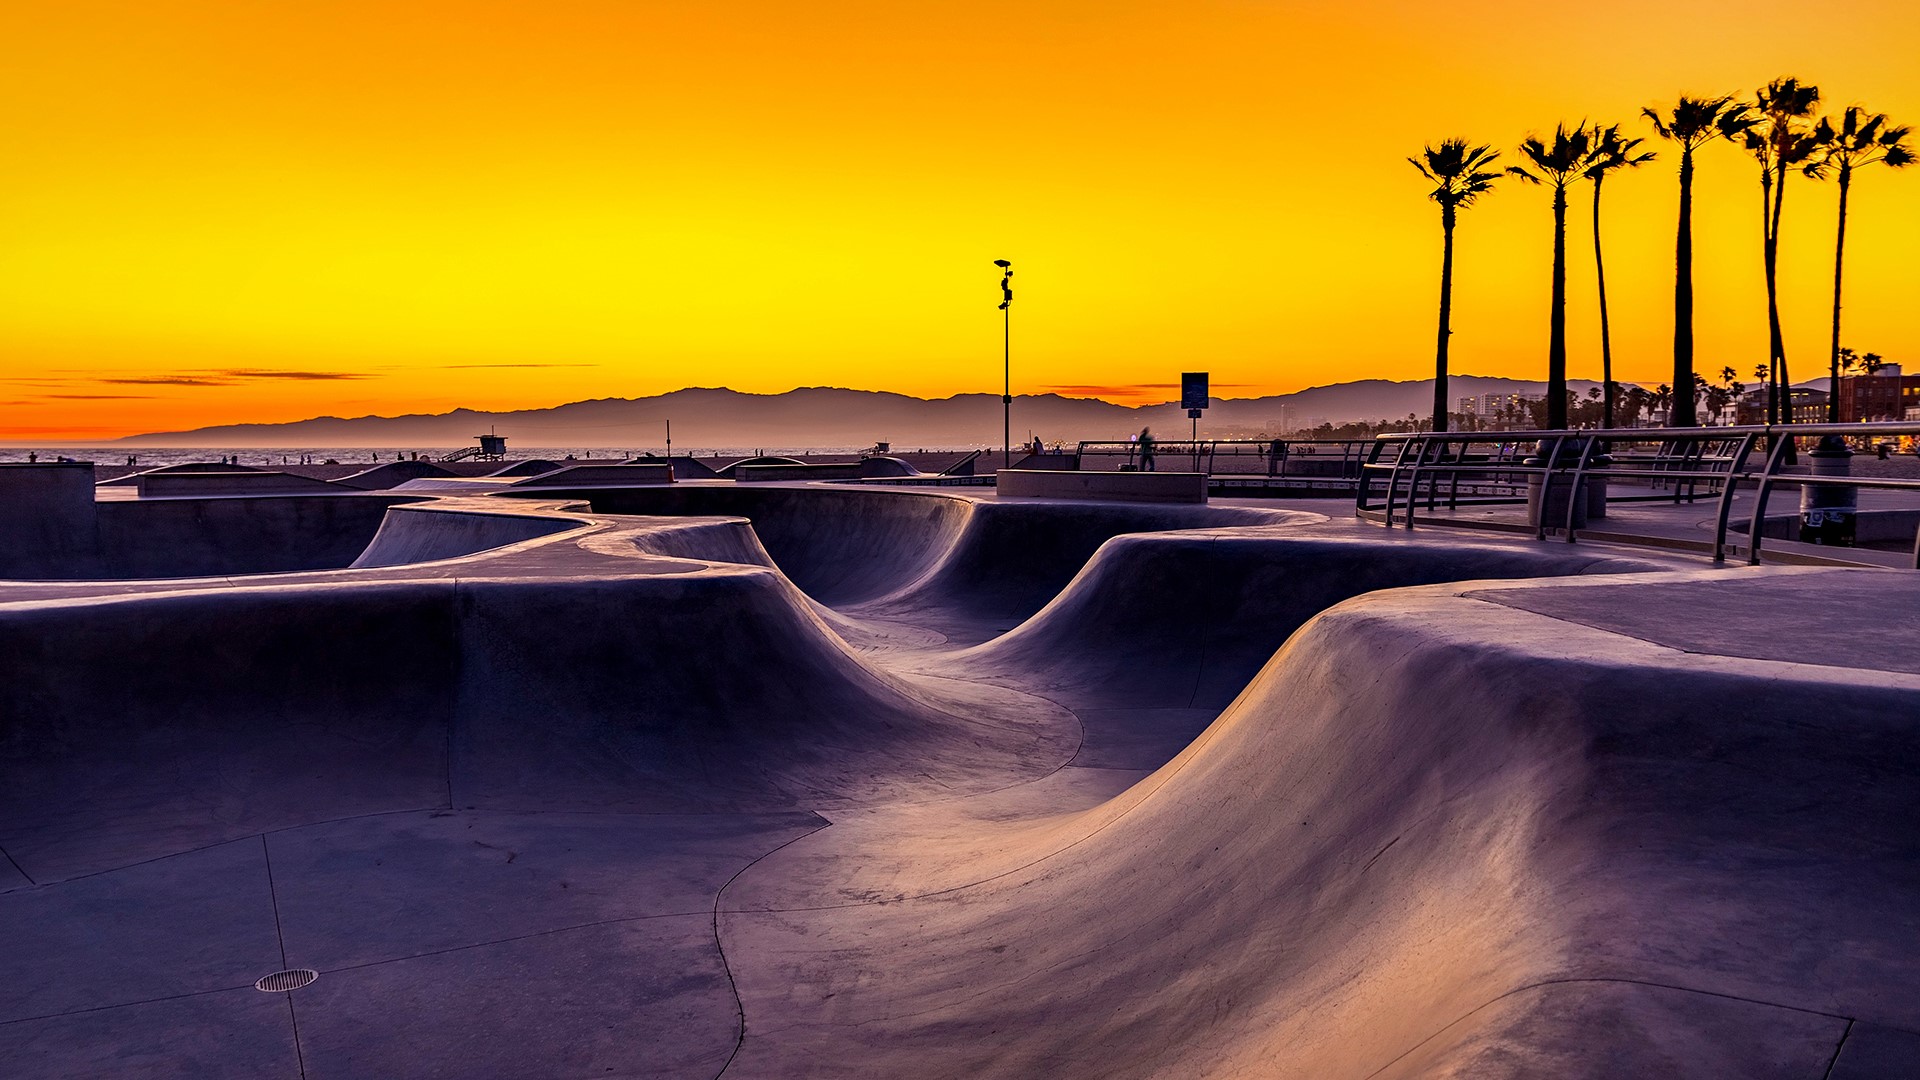 Free download Sunset over Venice Beach skatepark California USA Windows 10 [1920x1080] for your Desktop, Mobile & Tablet | Explore 52+ Venice Beach Pier Wallpapers | Venice Beach Wallpaper, Venice Beach Computer